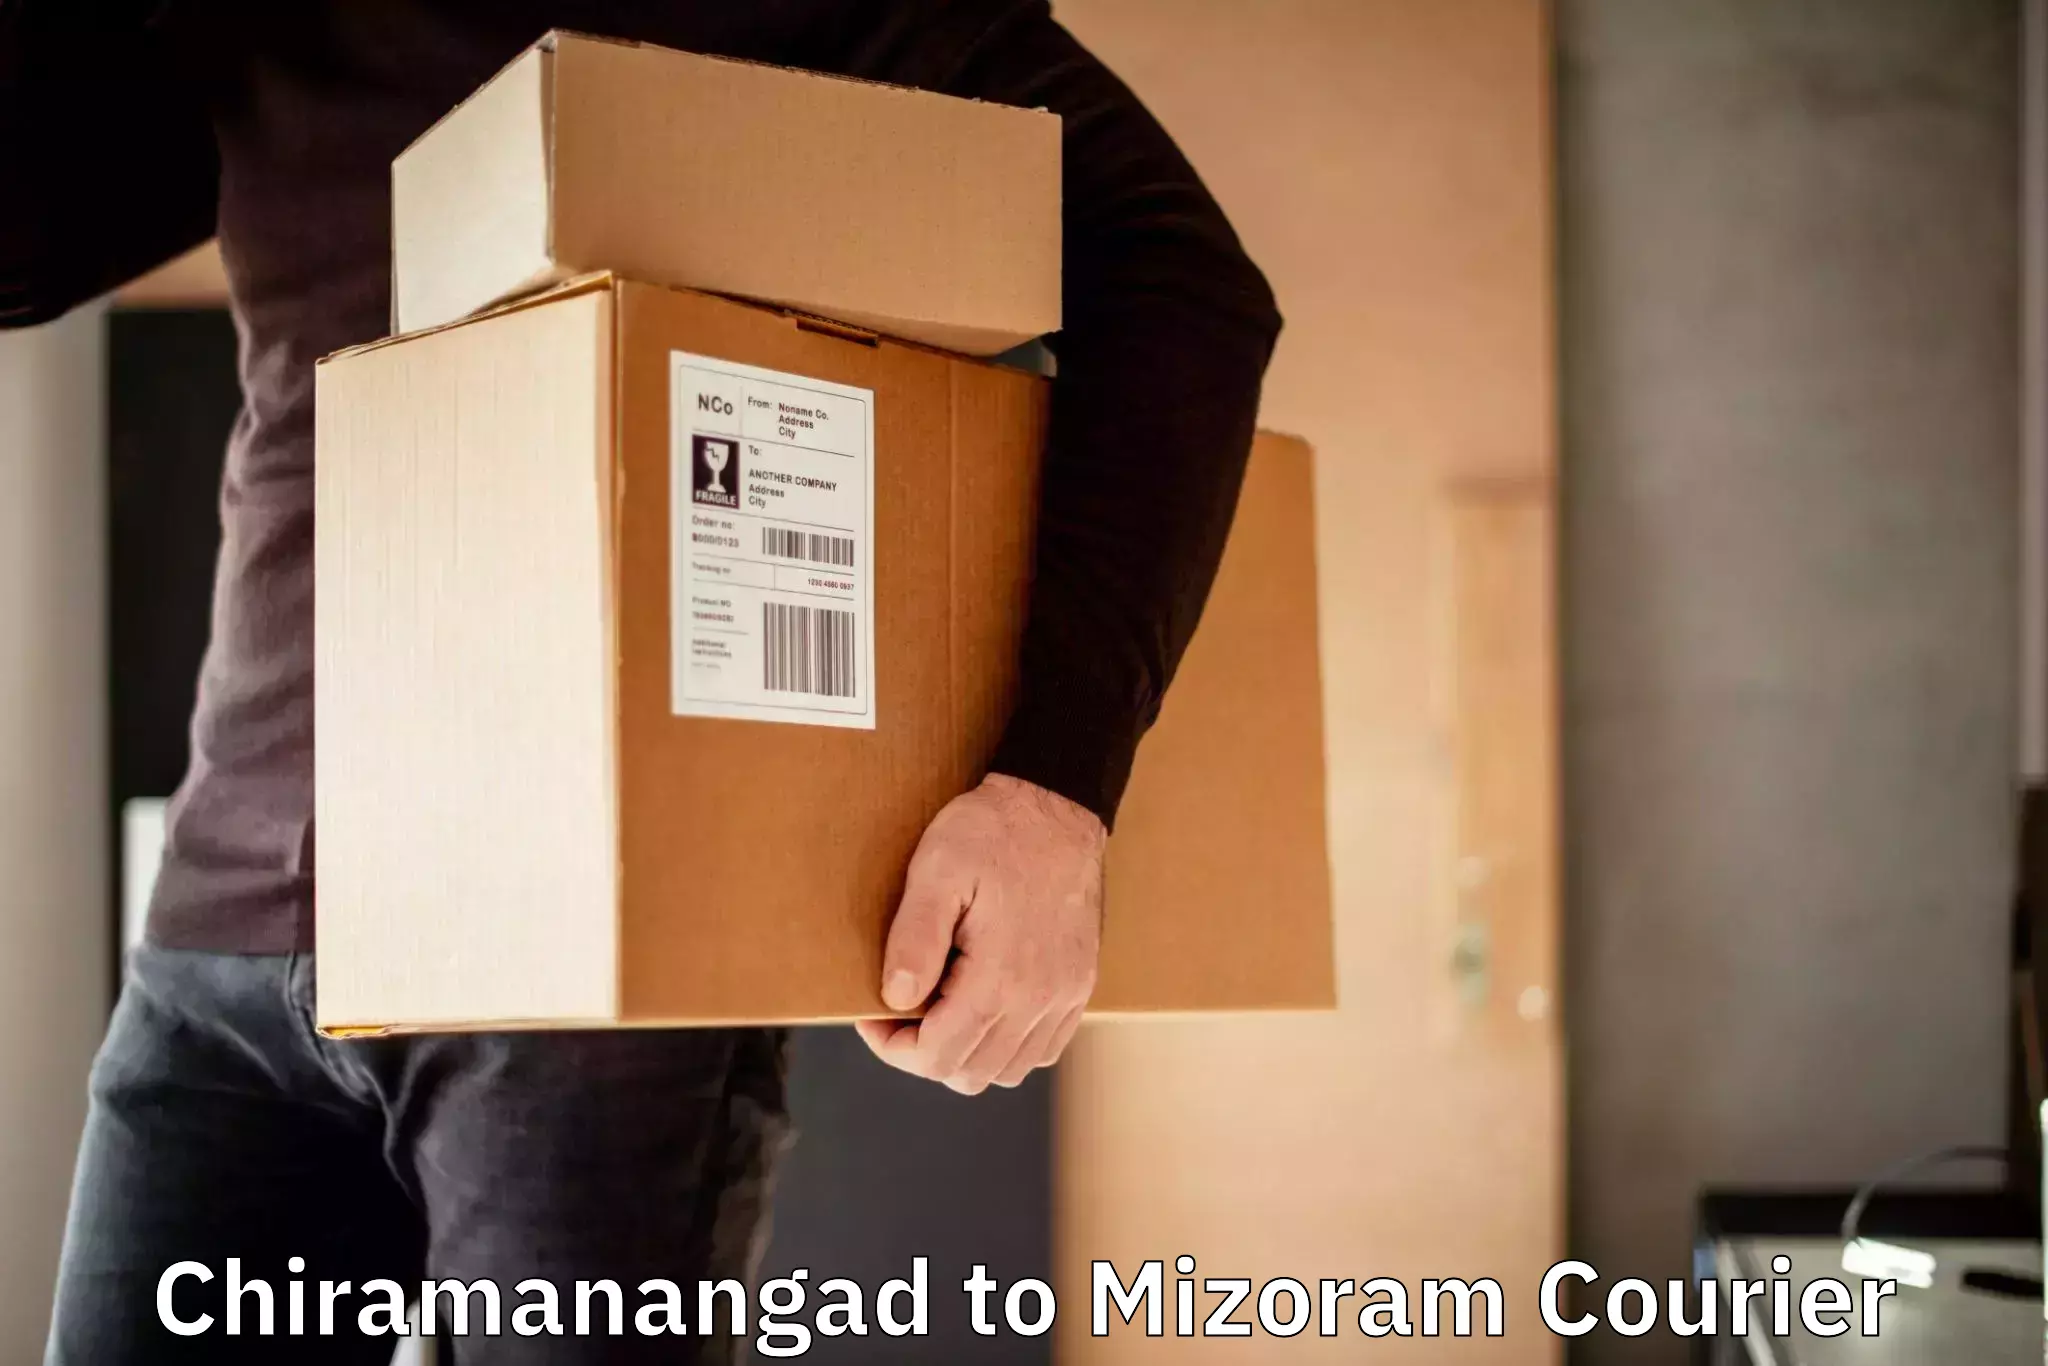 On-call courier service Chiramanangad to Kolasib